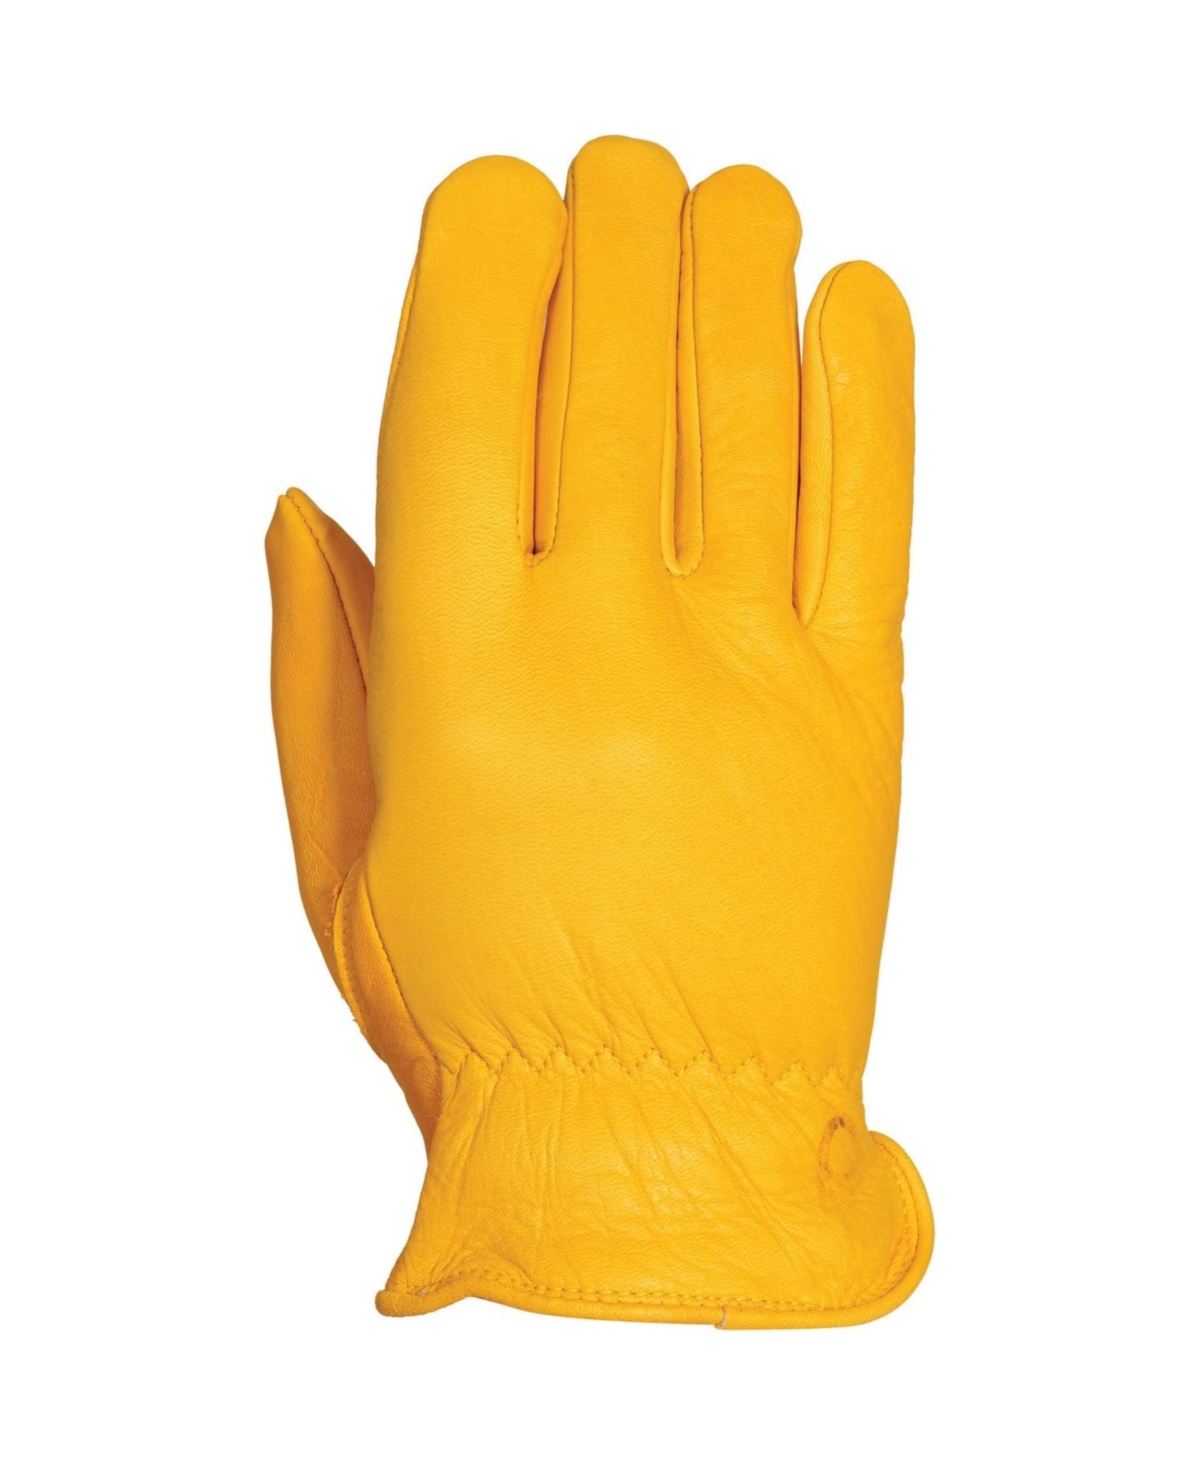 Bellingham Premium Leather Driving Gloves, Yellow - Yellow